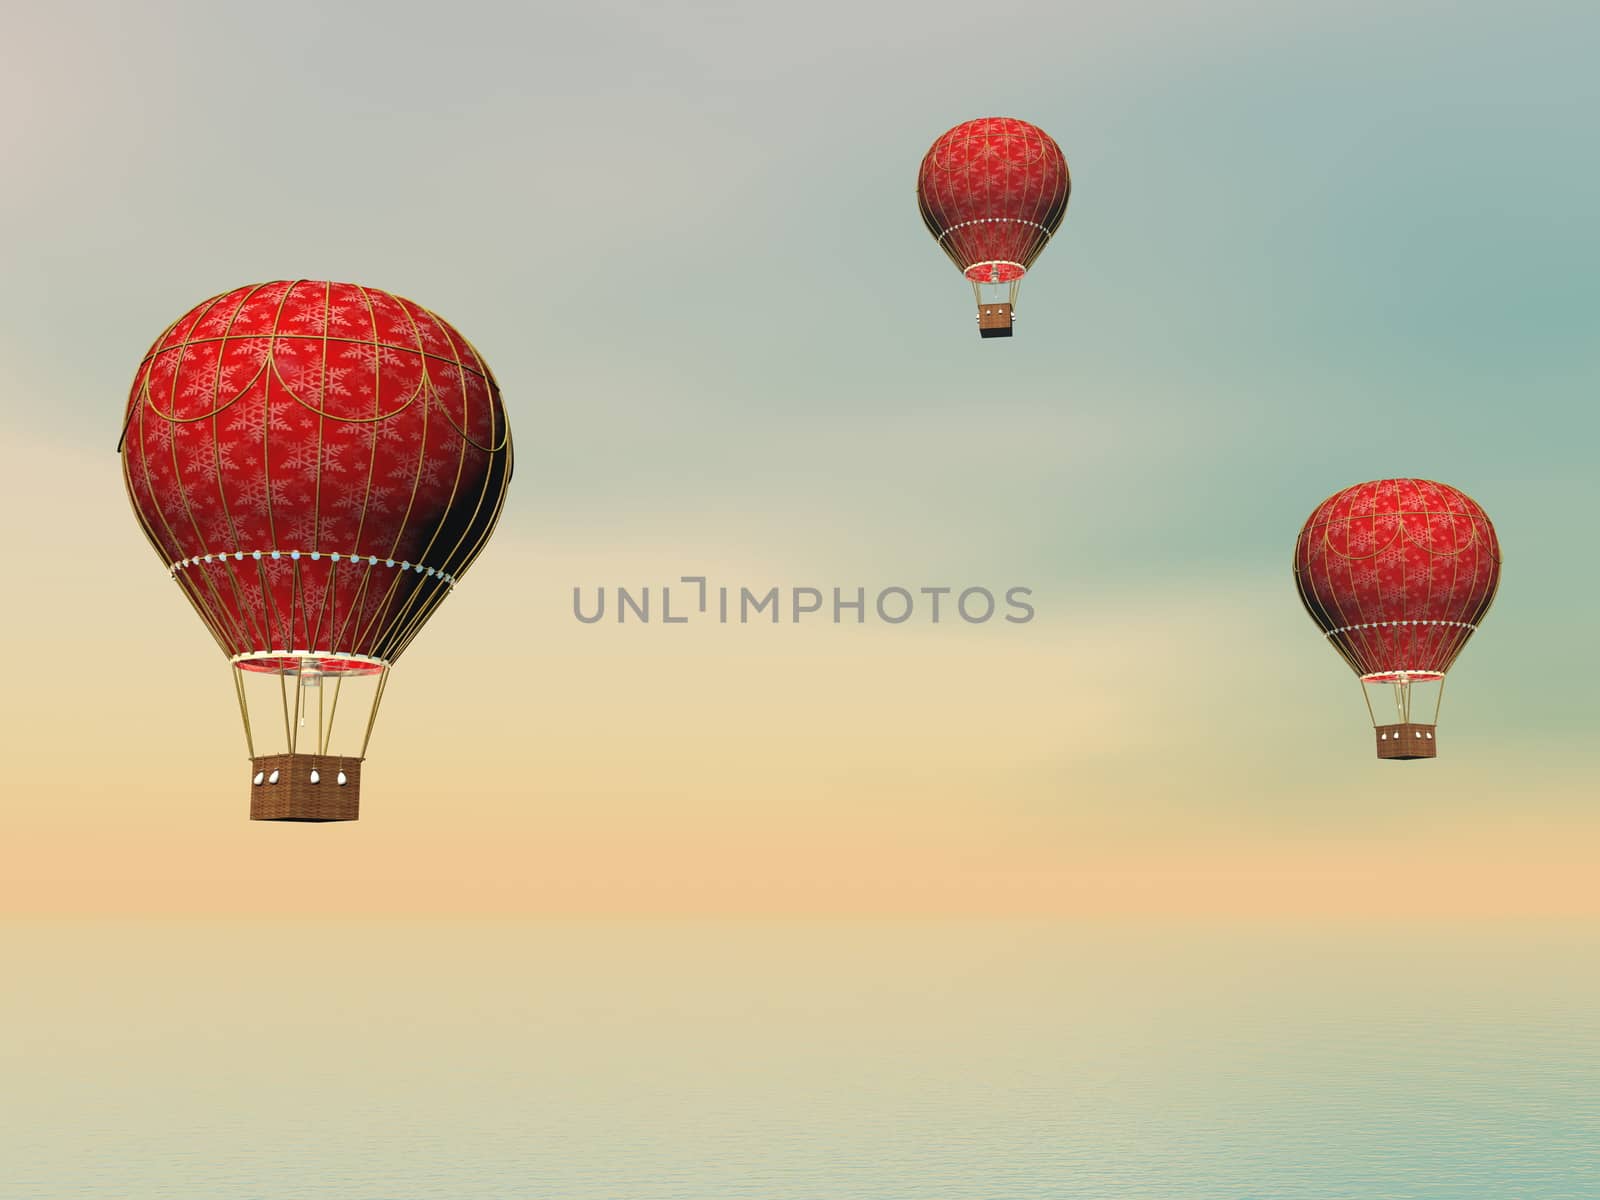 Vintage hot air balloons - 3D render by Elenaphotos21